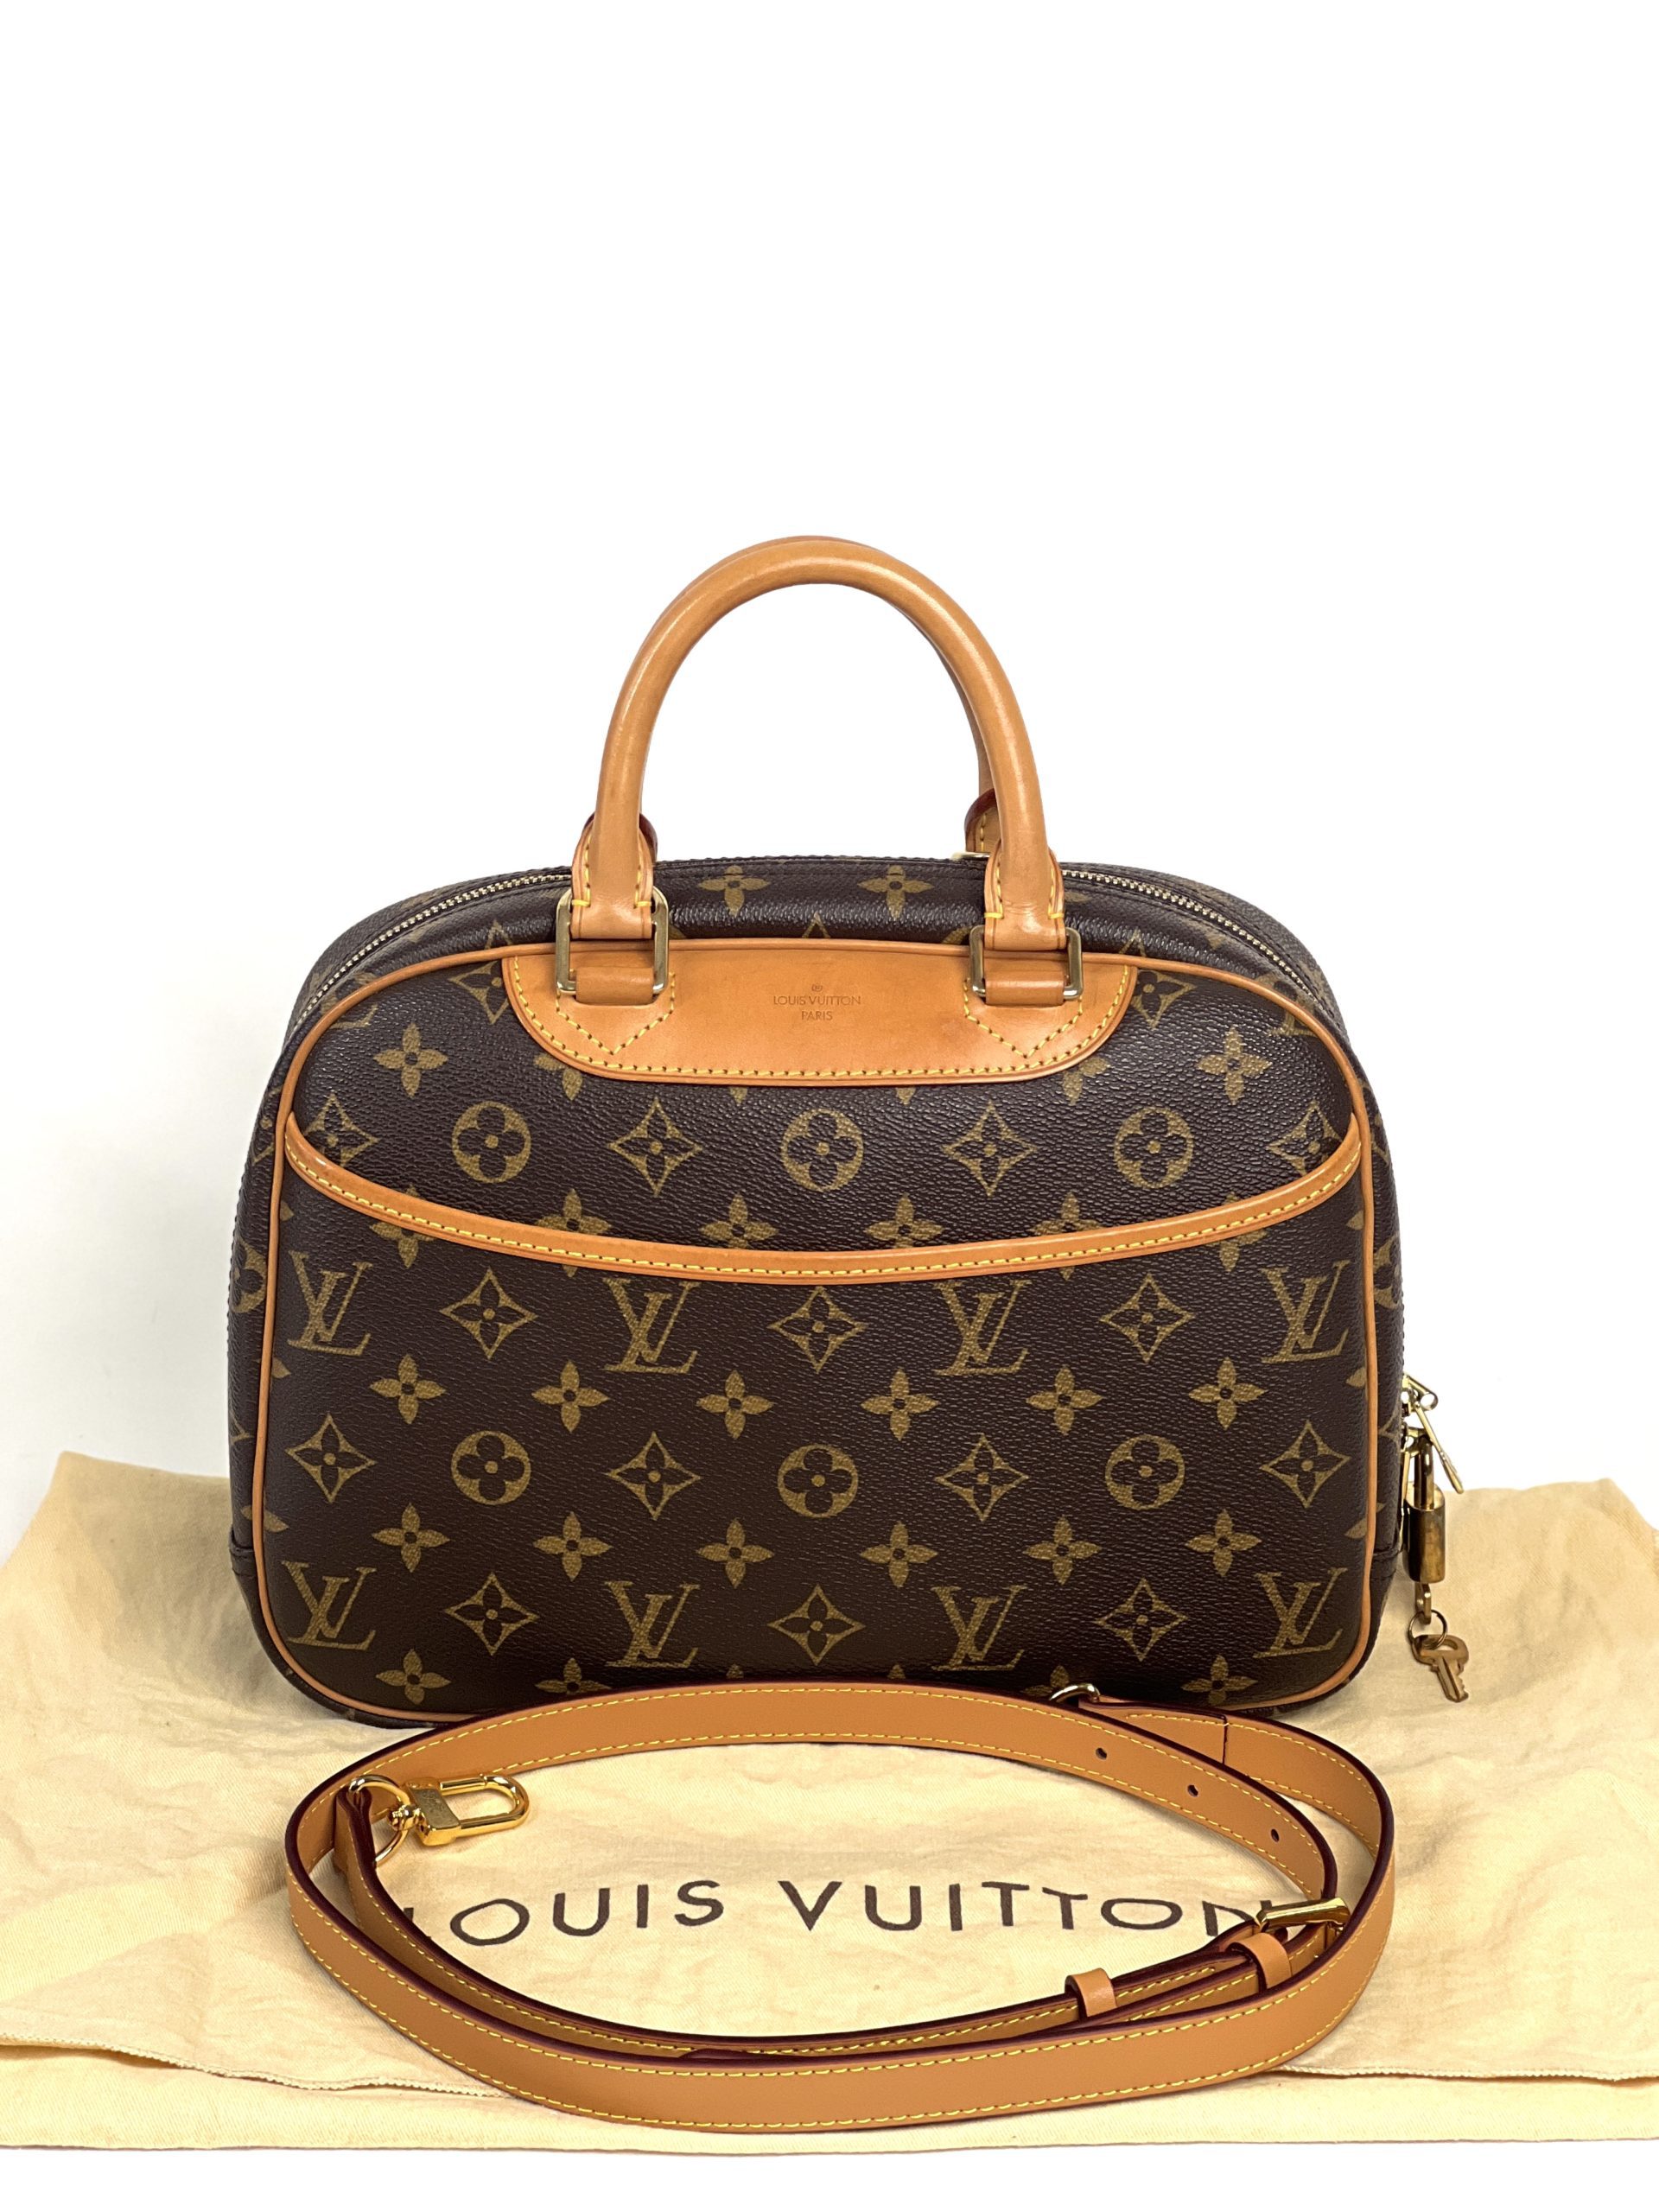 Louis Vuitton Trouville Monogram – Coco Approved Studio